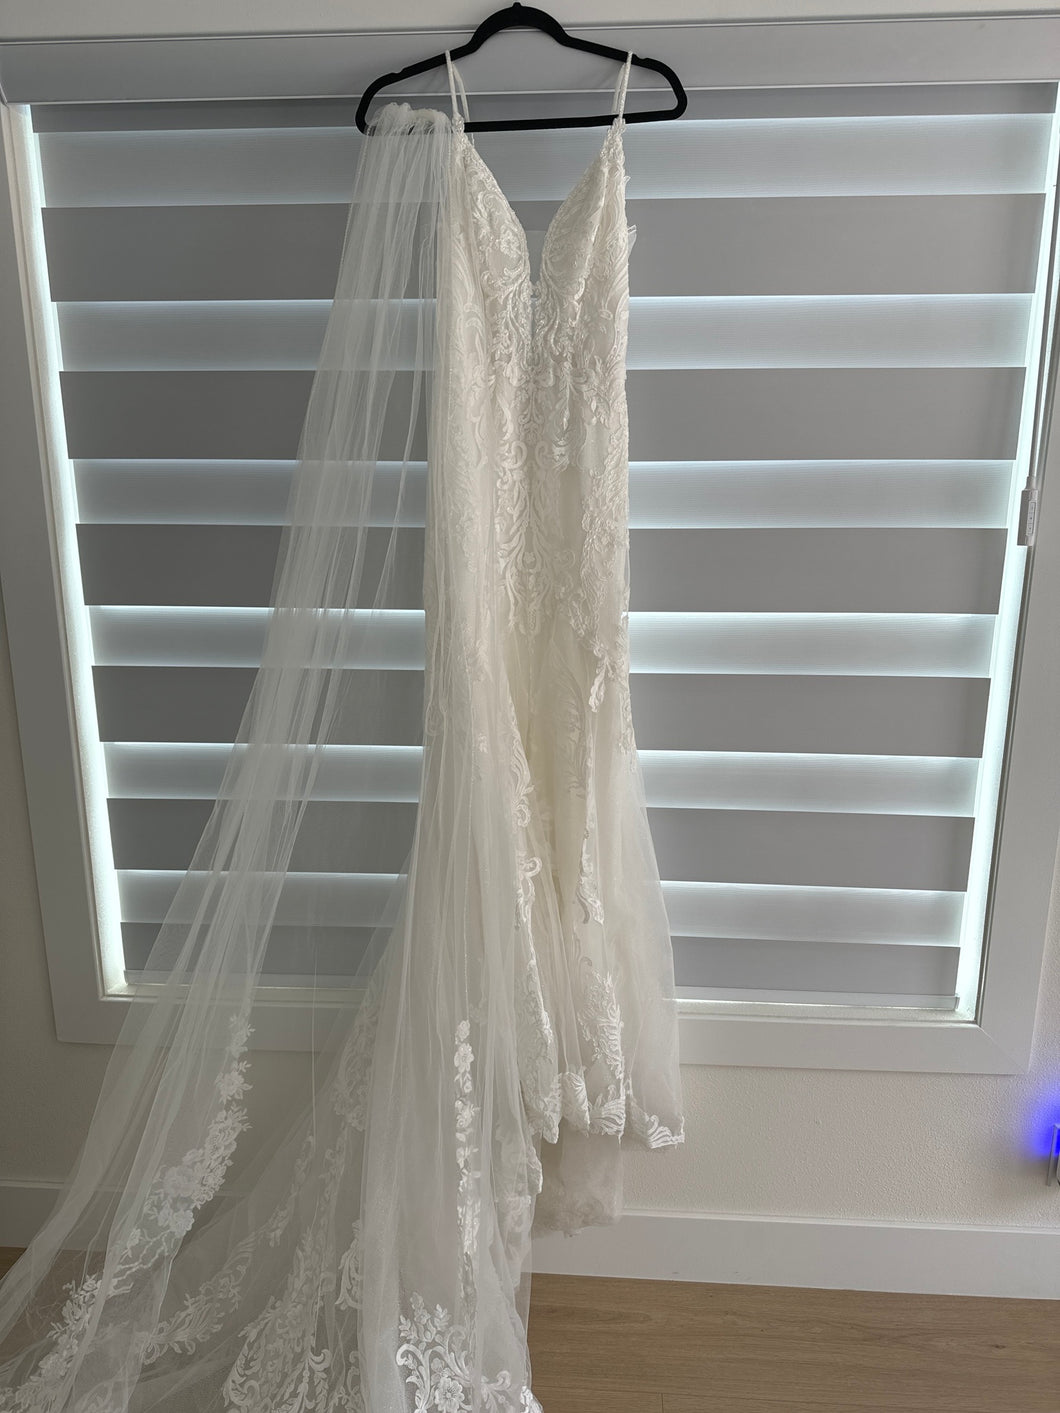 Essense of Australia 'D3249' wedding dress size-02 PREOWNED